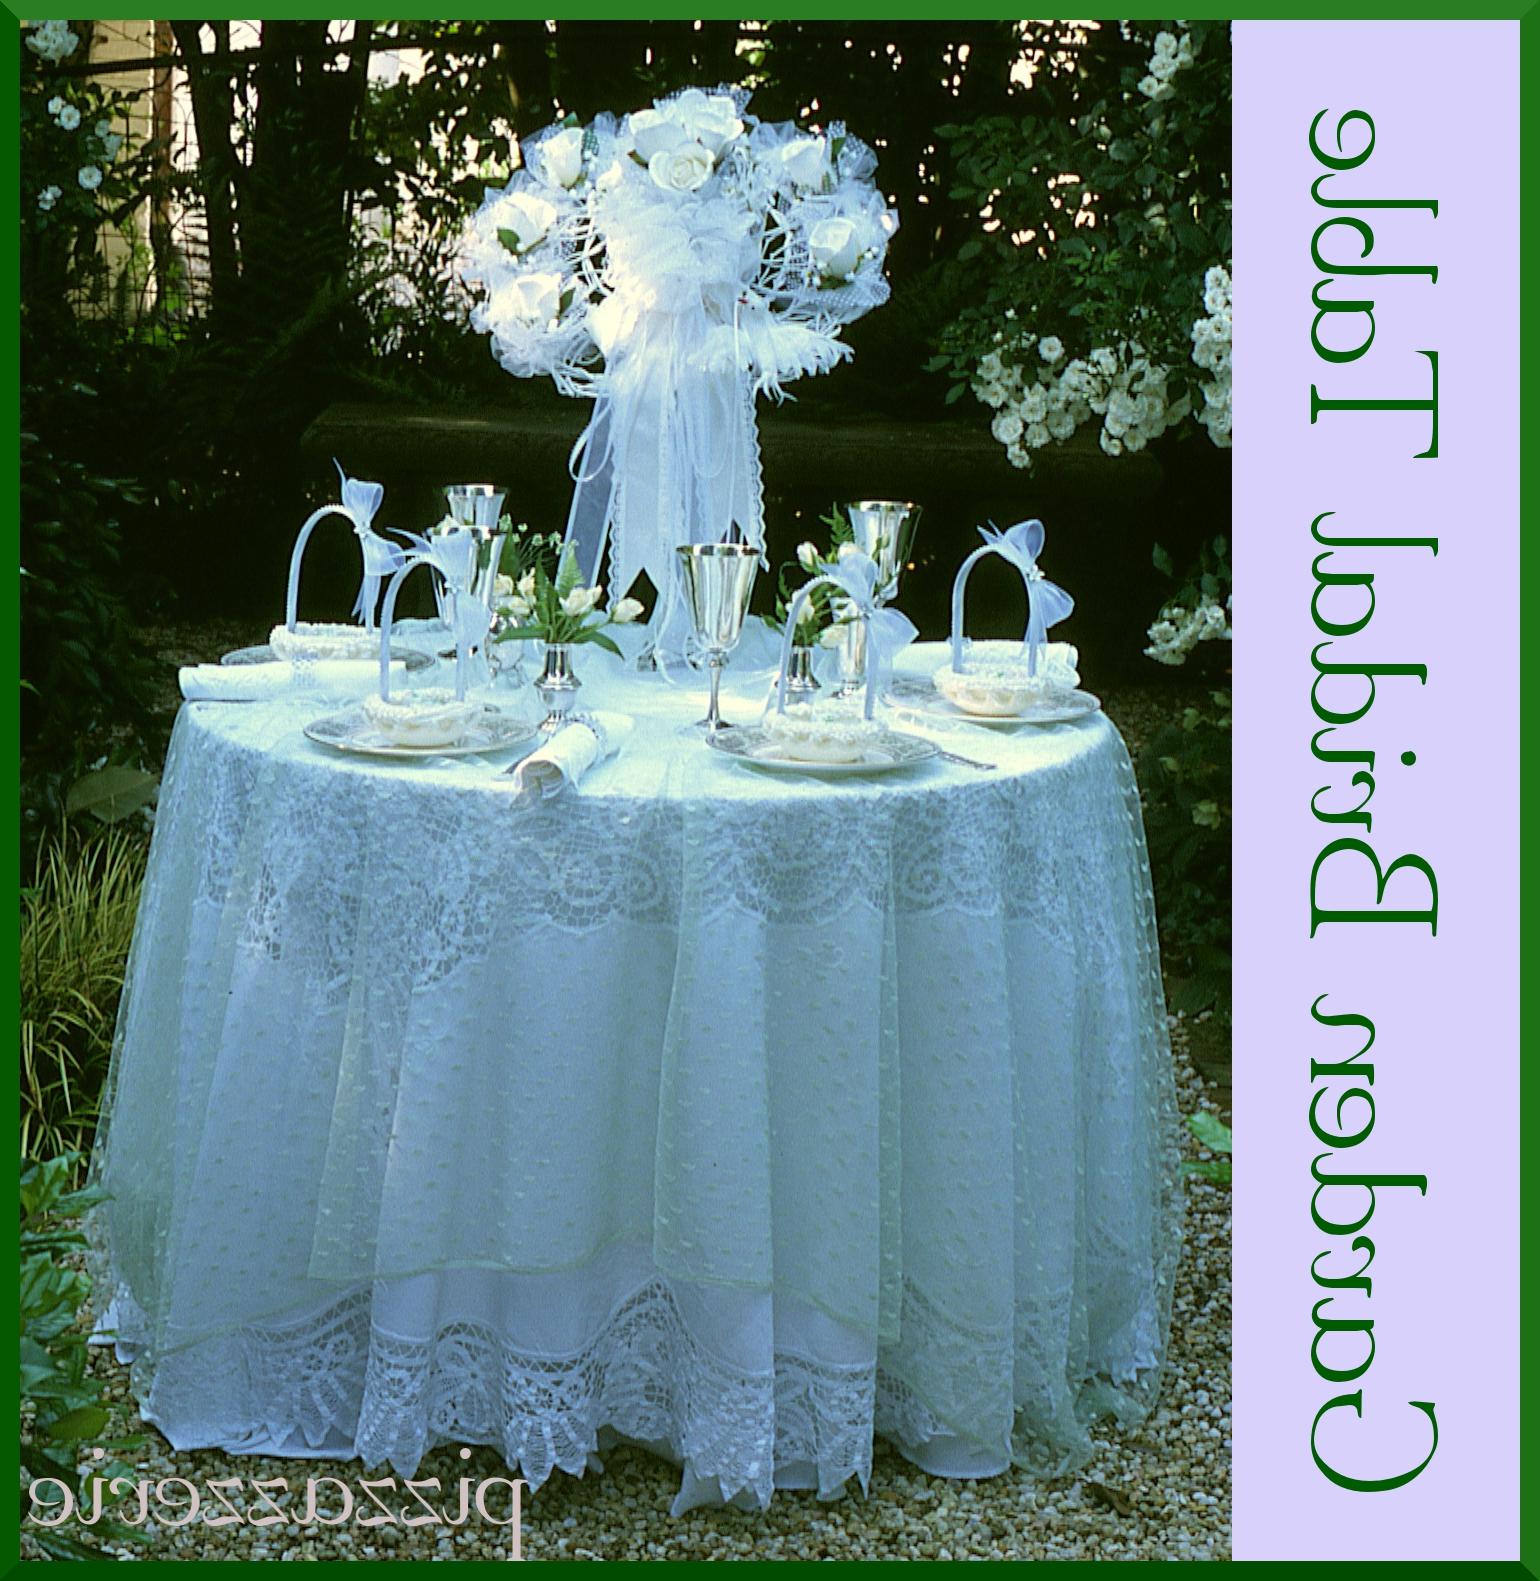 Garden Bridal Table & Sugar